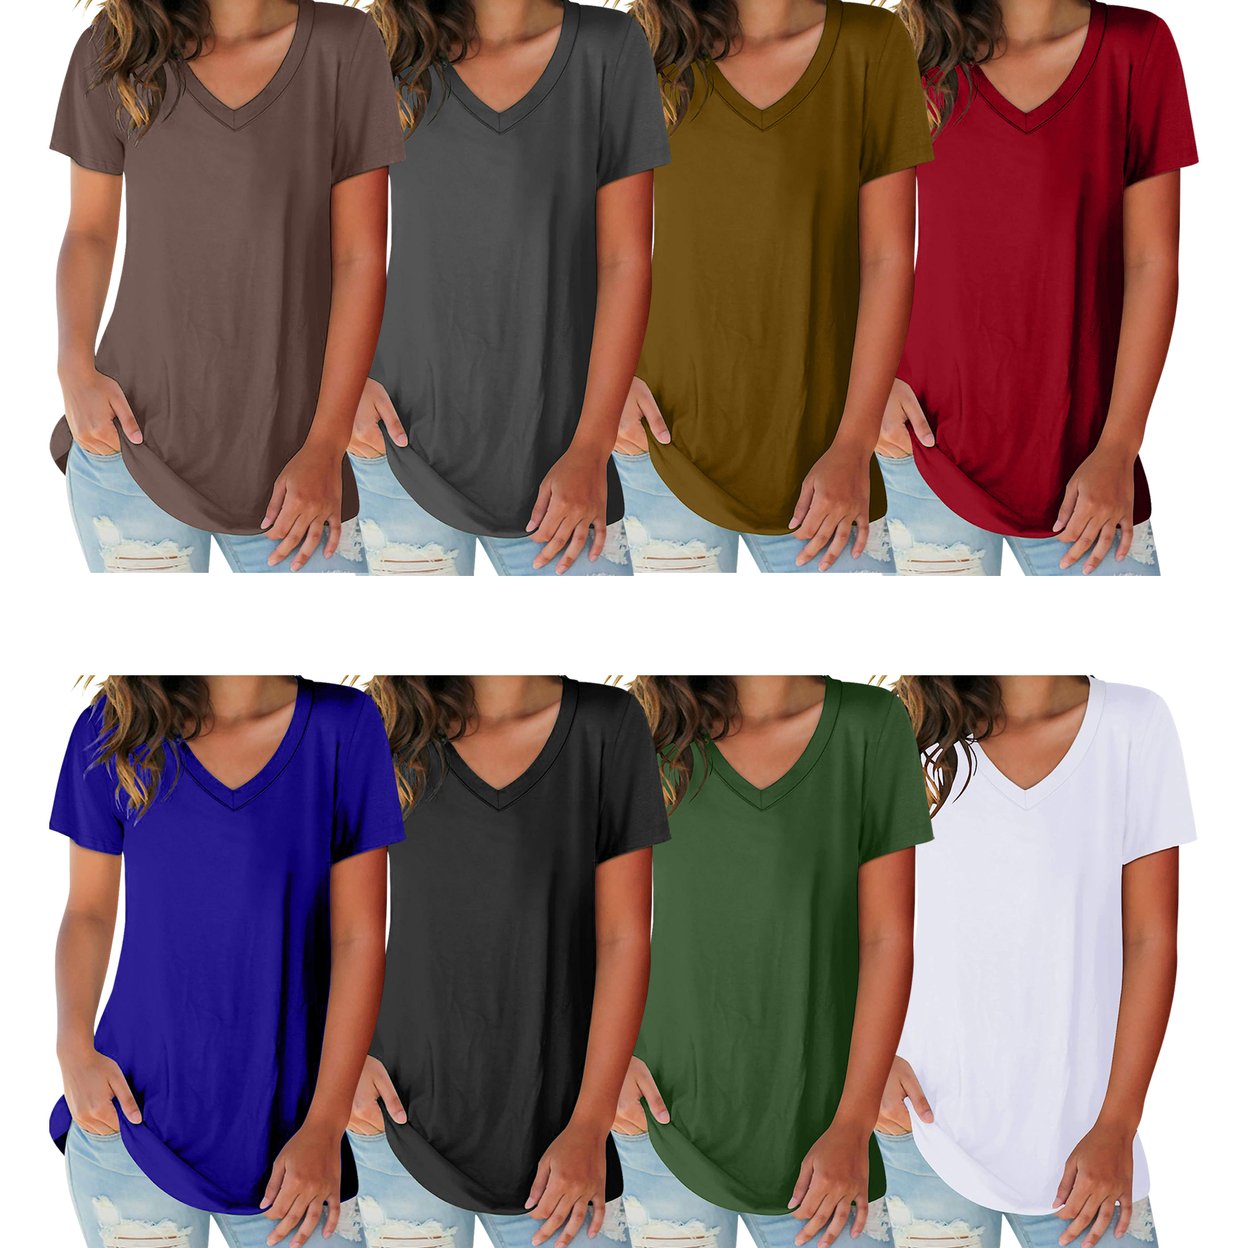 2-Pack: Women's Ultra Soft Smooth Cotton Blend Basic V-Neck Short Sleeve Shirts - Grey & Mustard, Small